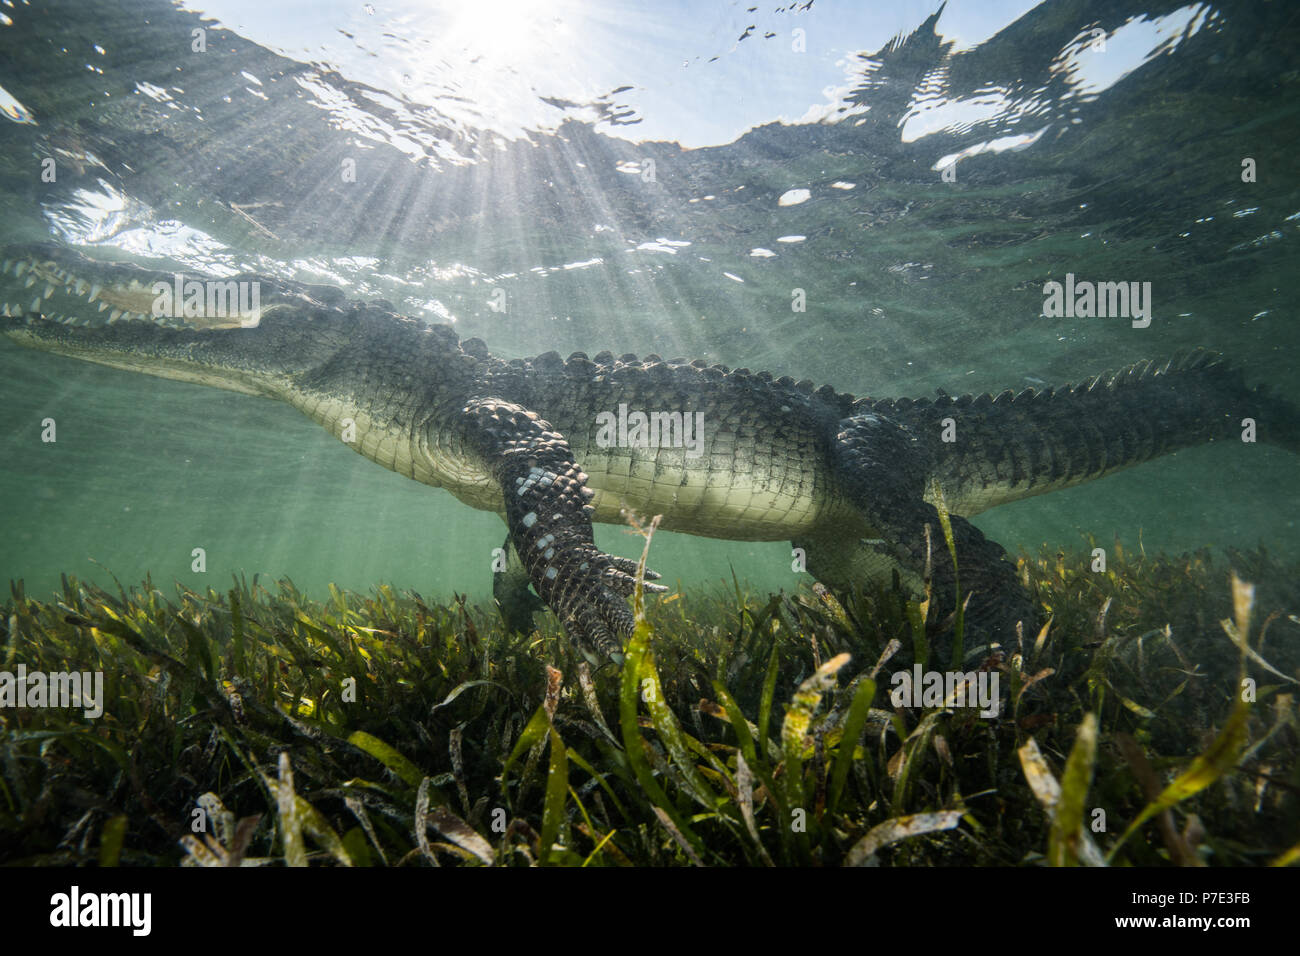 Crocodile (Crocodylus acutus) dans les eaux peu profondes, banques, Chinchorro Xcalak, Quintana Roo, Mexique Banque D'Images